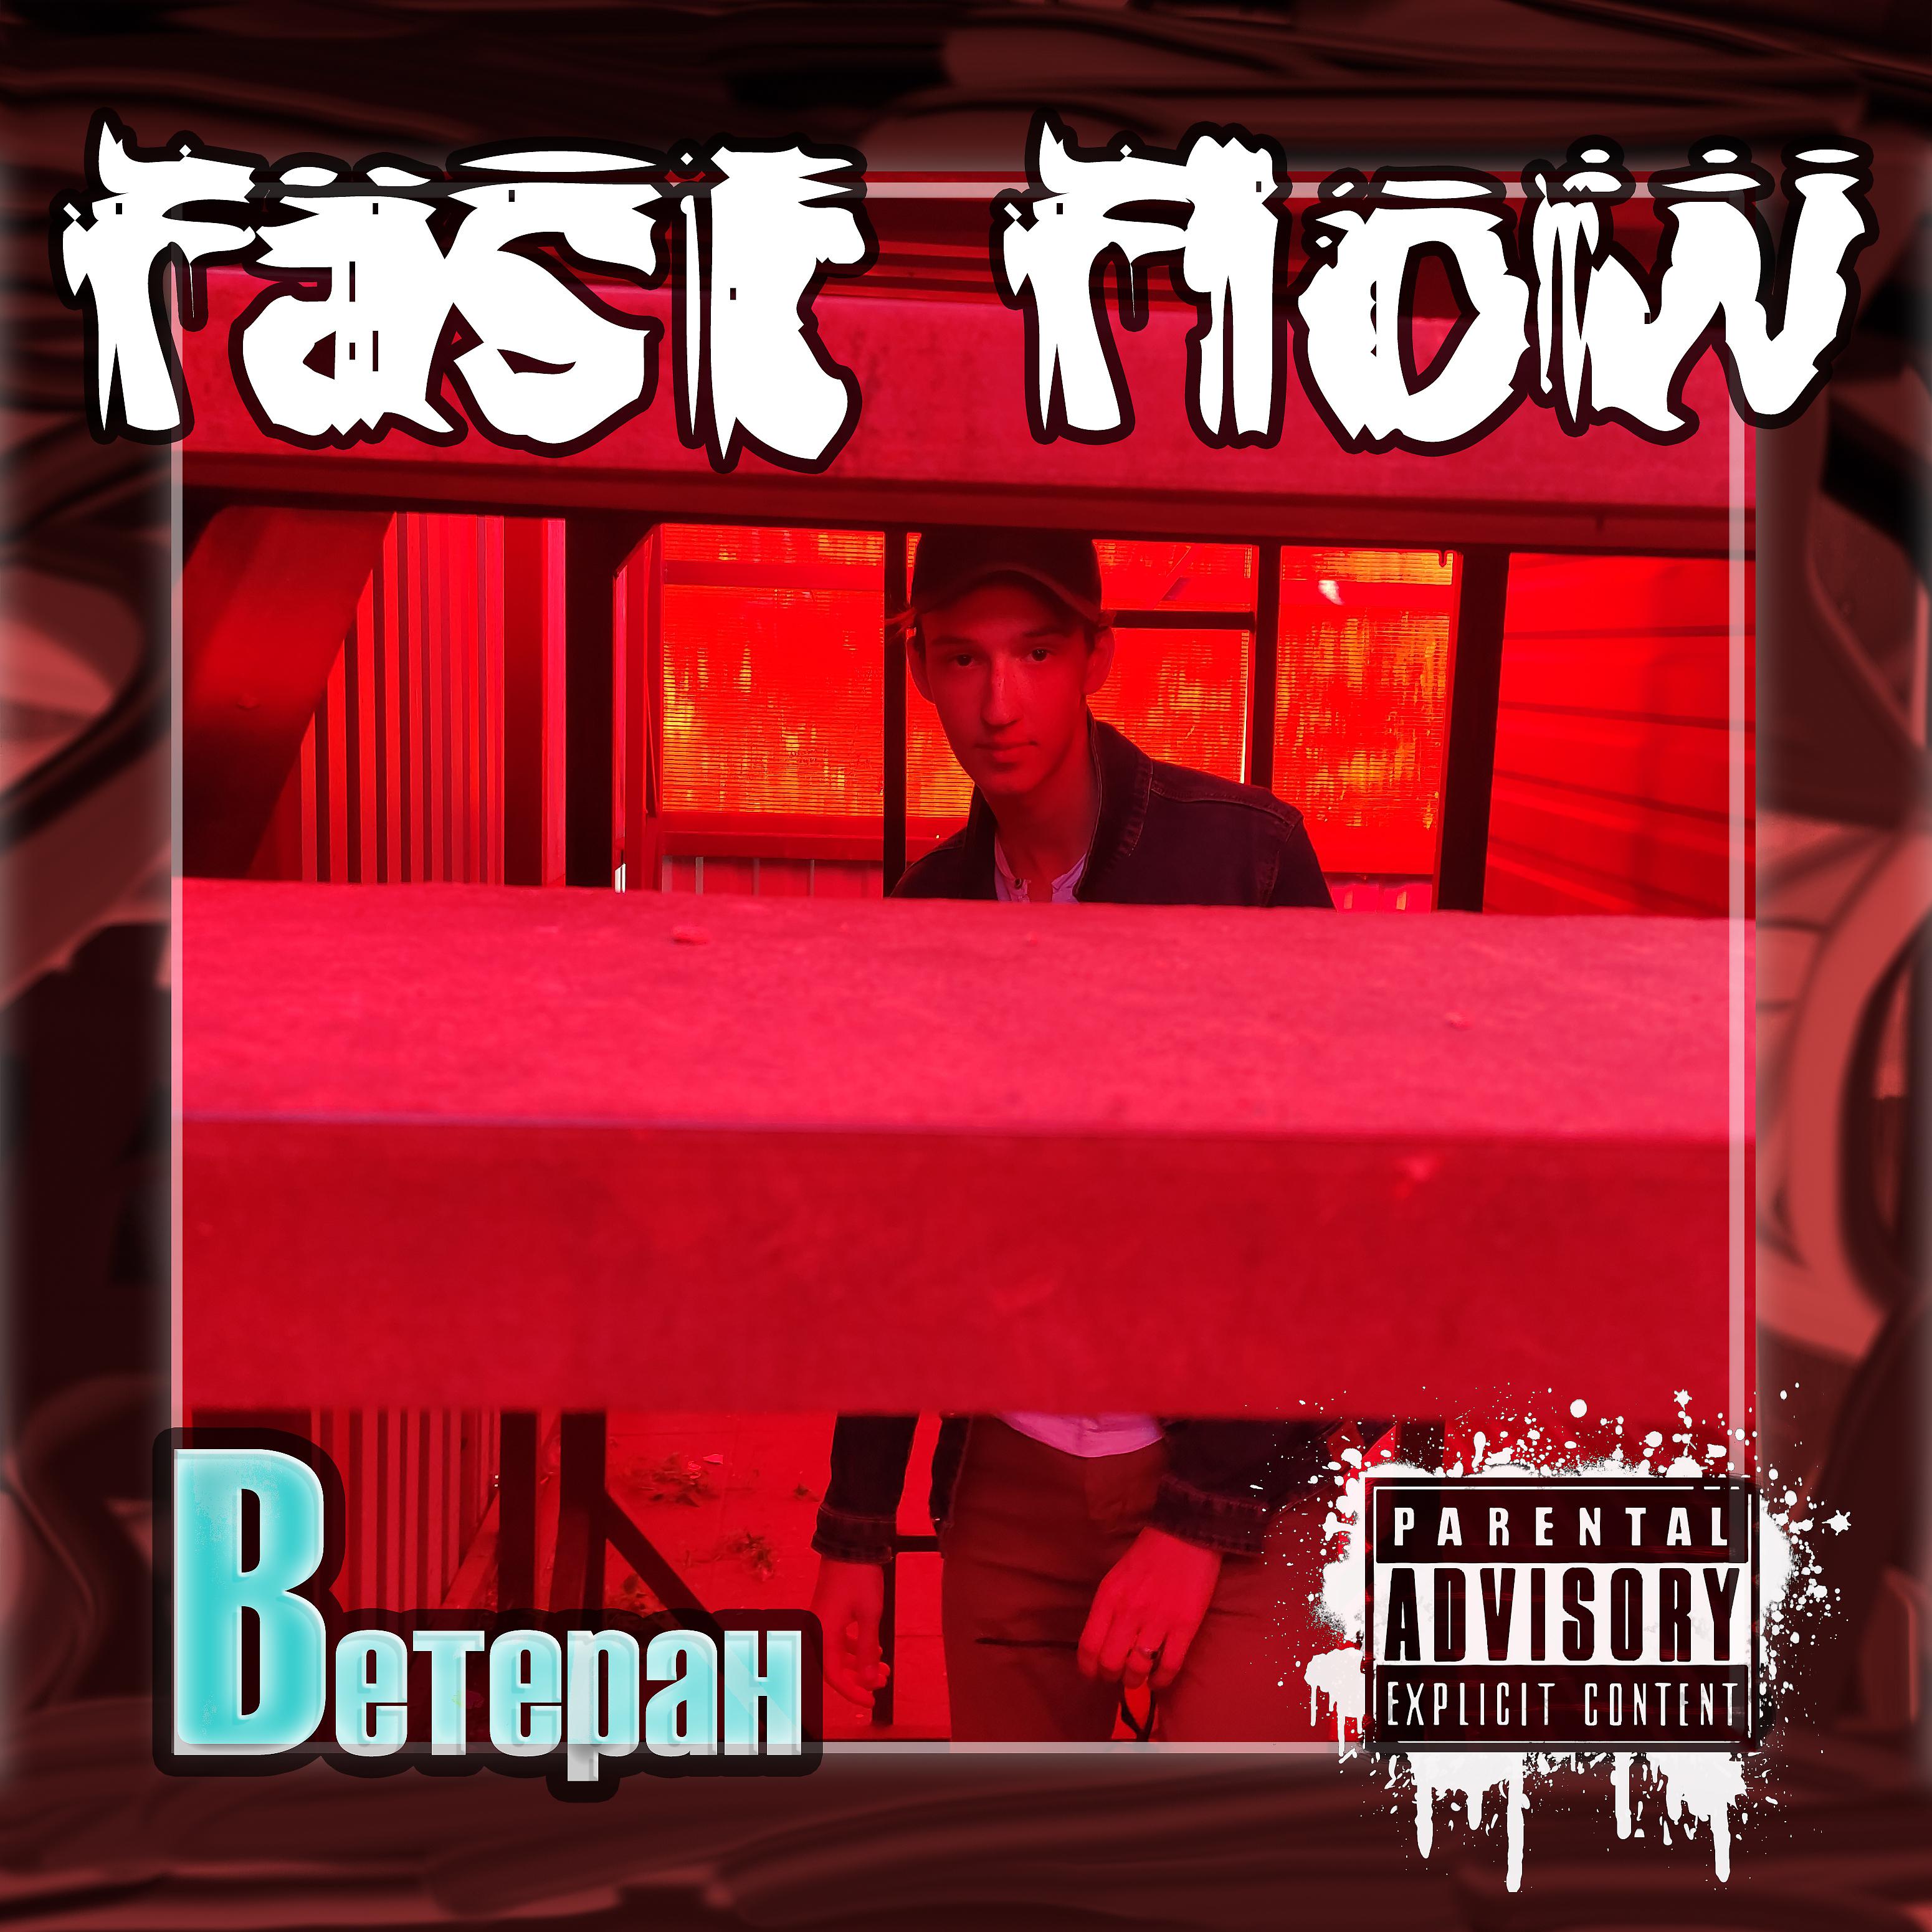 Постер альбома Fast Flow